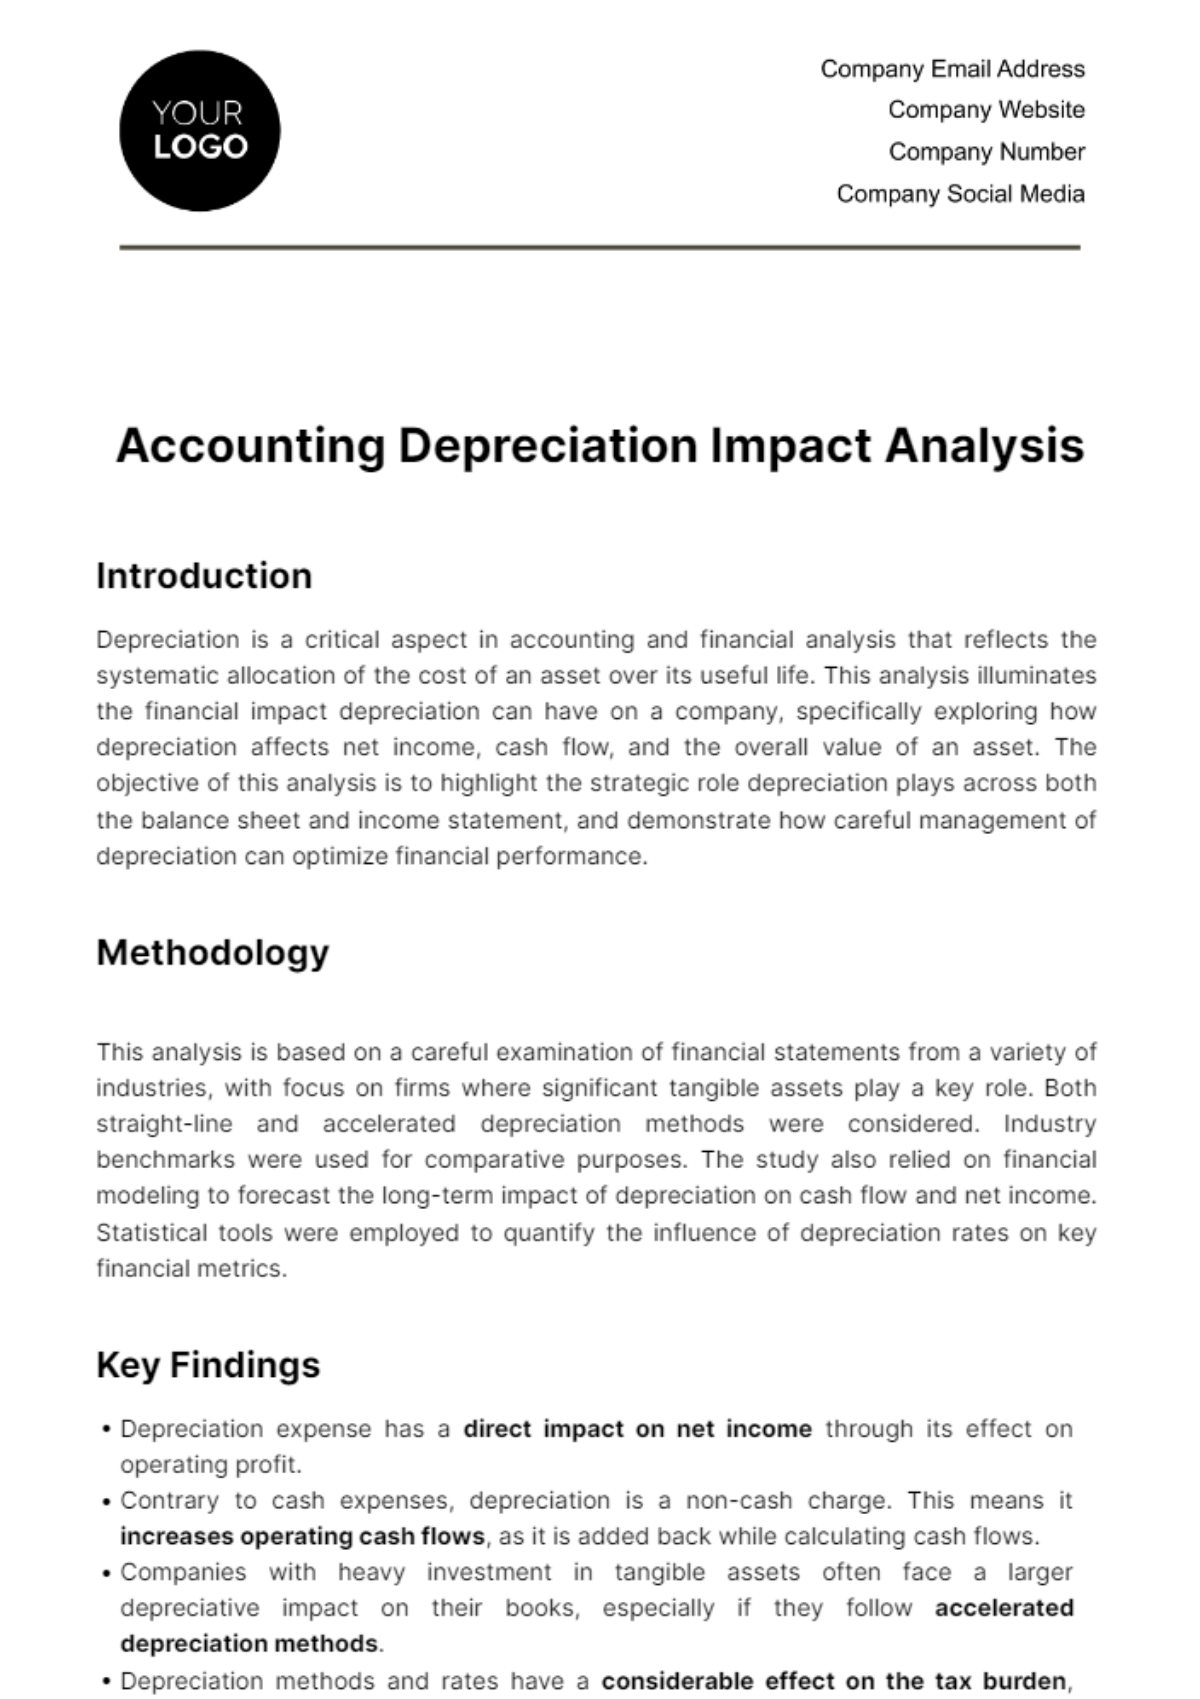 Accounting Depreciation Impact Analysis Template